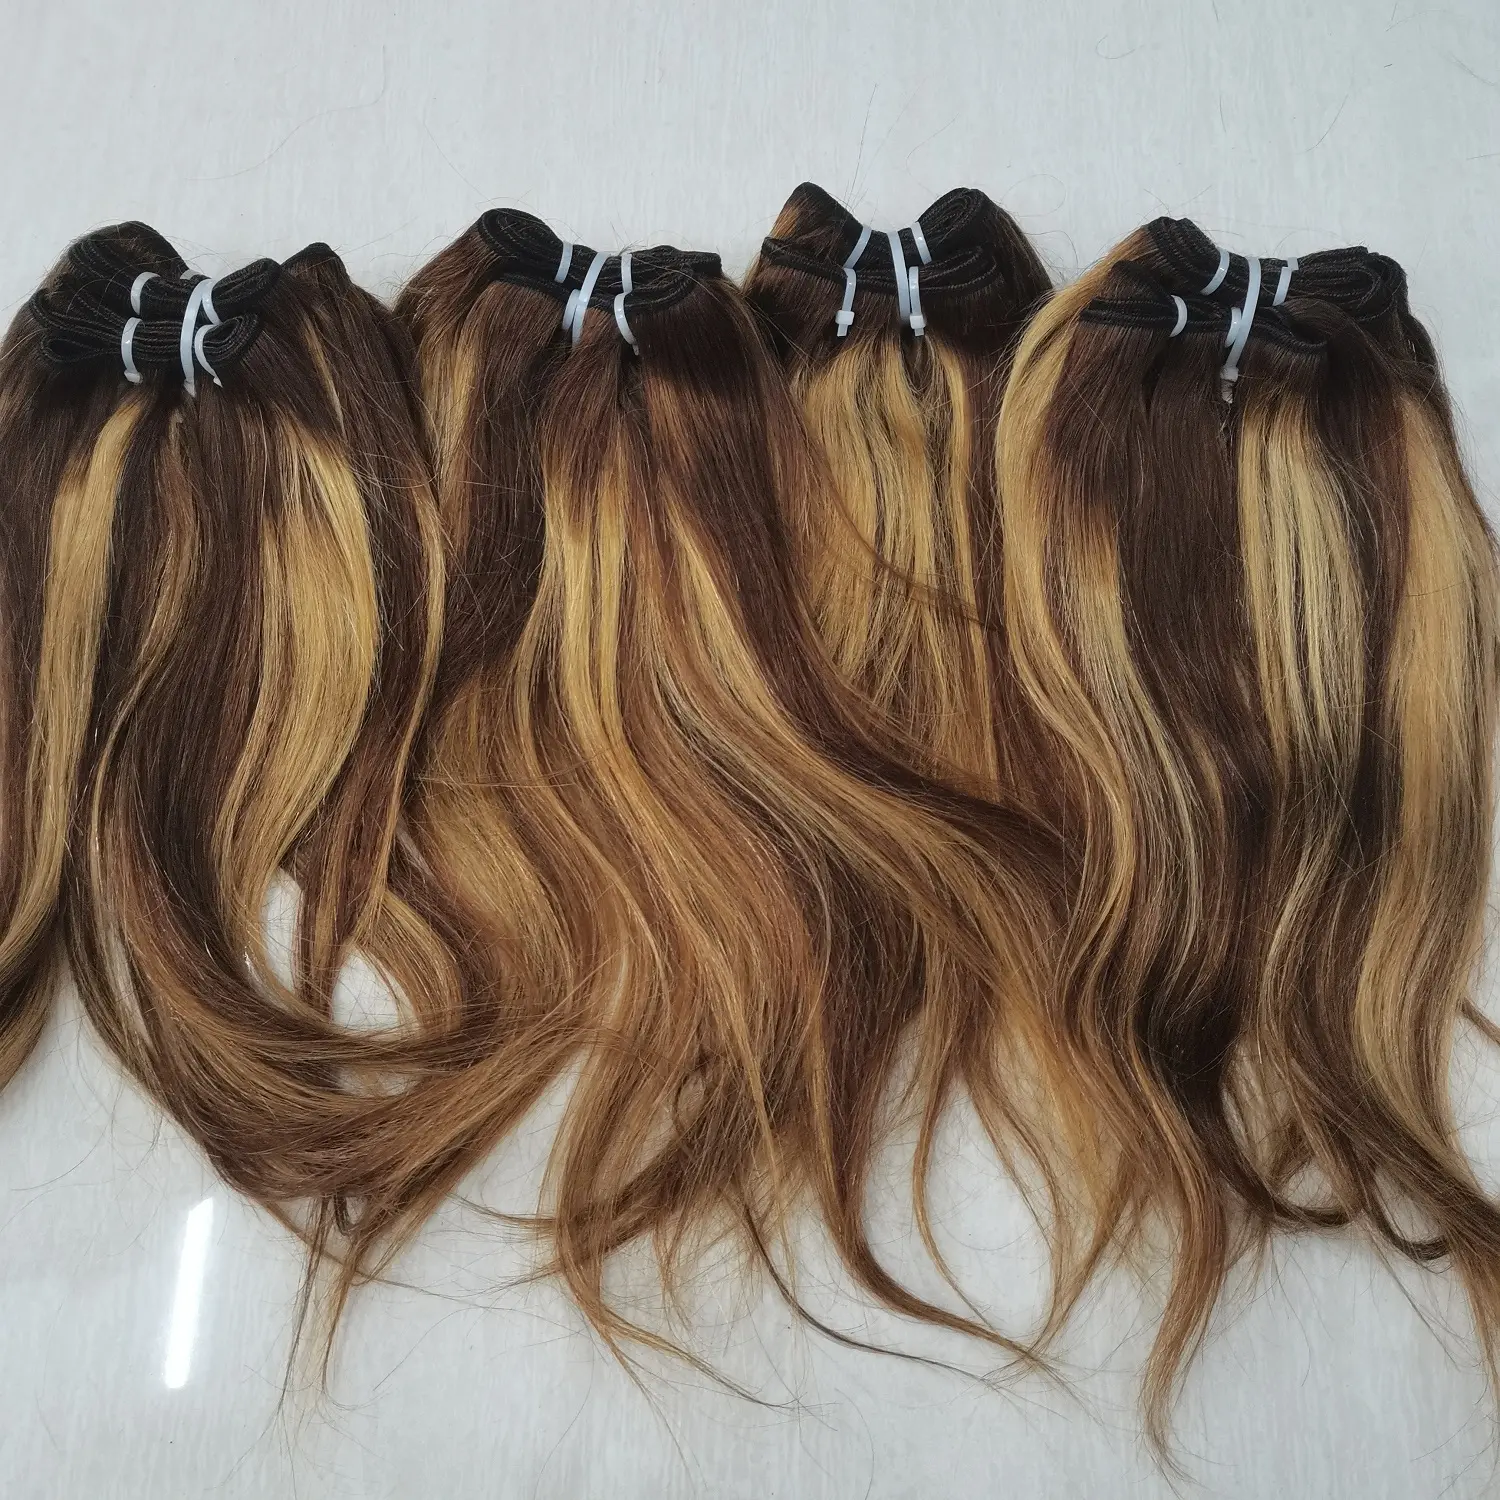 Letsfly Cheap Straight 4-27 Piano Color Hair Extensions Highlight 100% Brazilian Human Virgin Hair Bundles Free Shipping